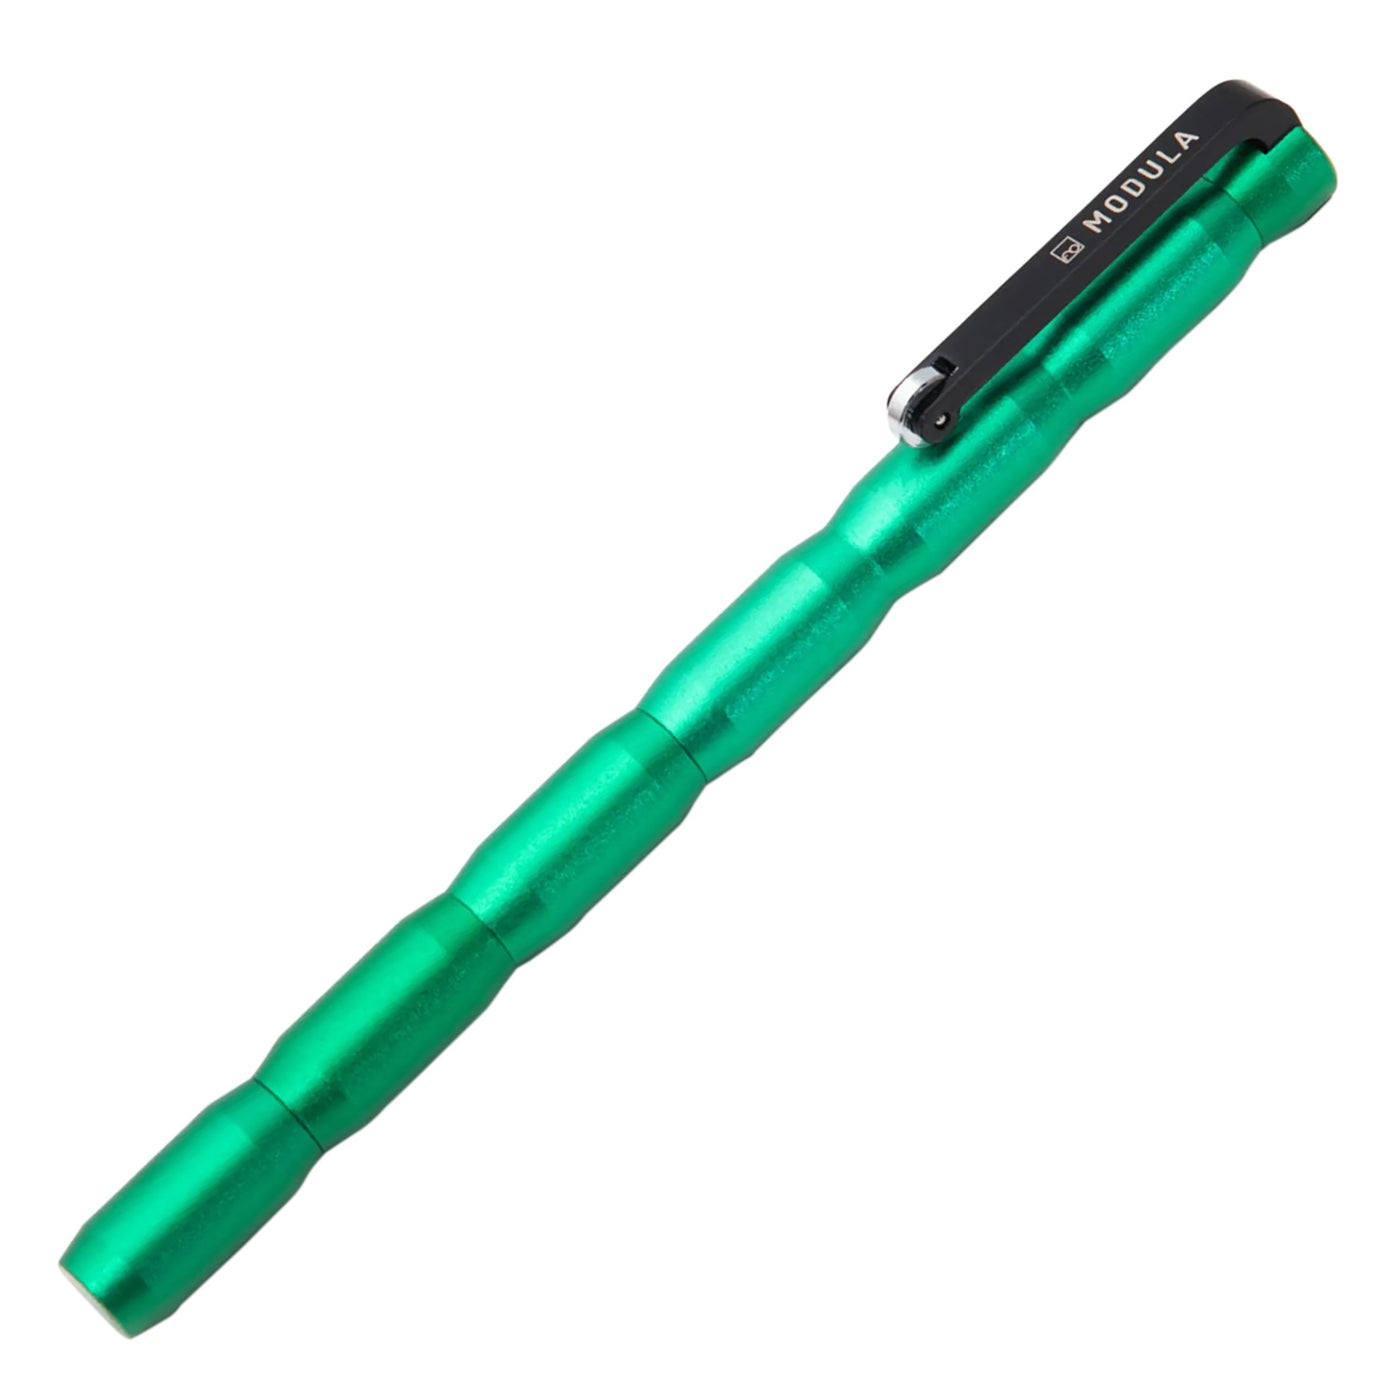 Pininfarina Segno Forever Modula Multifunction Pen - Green 4